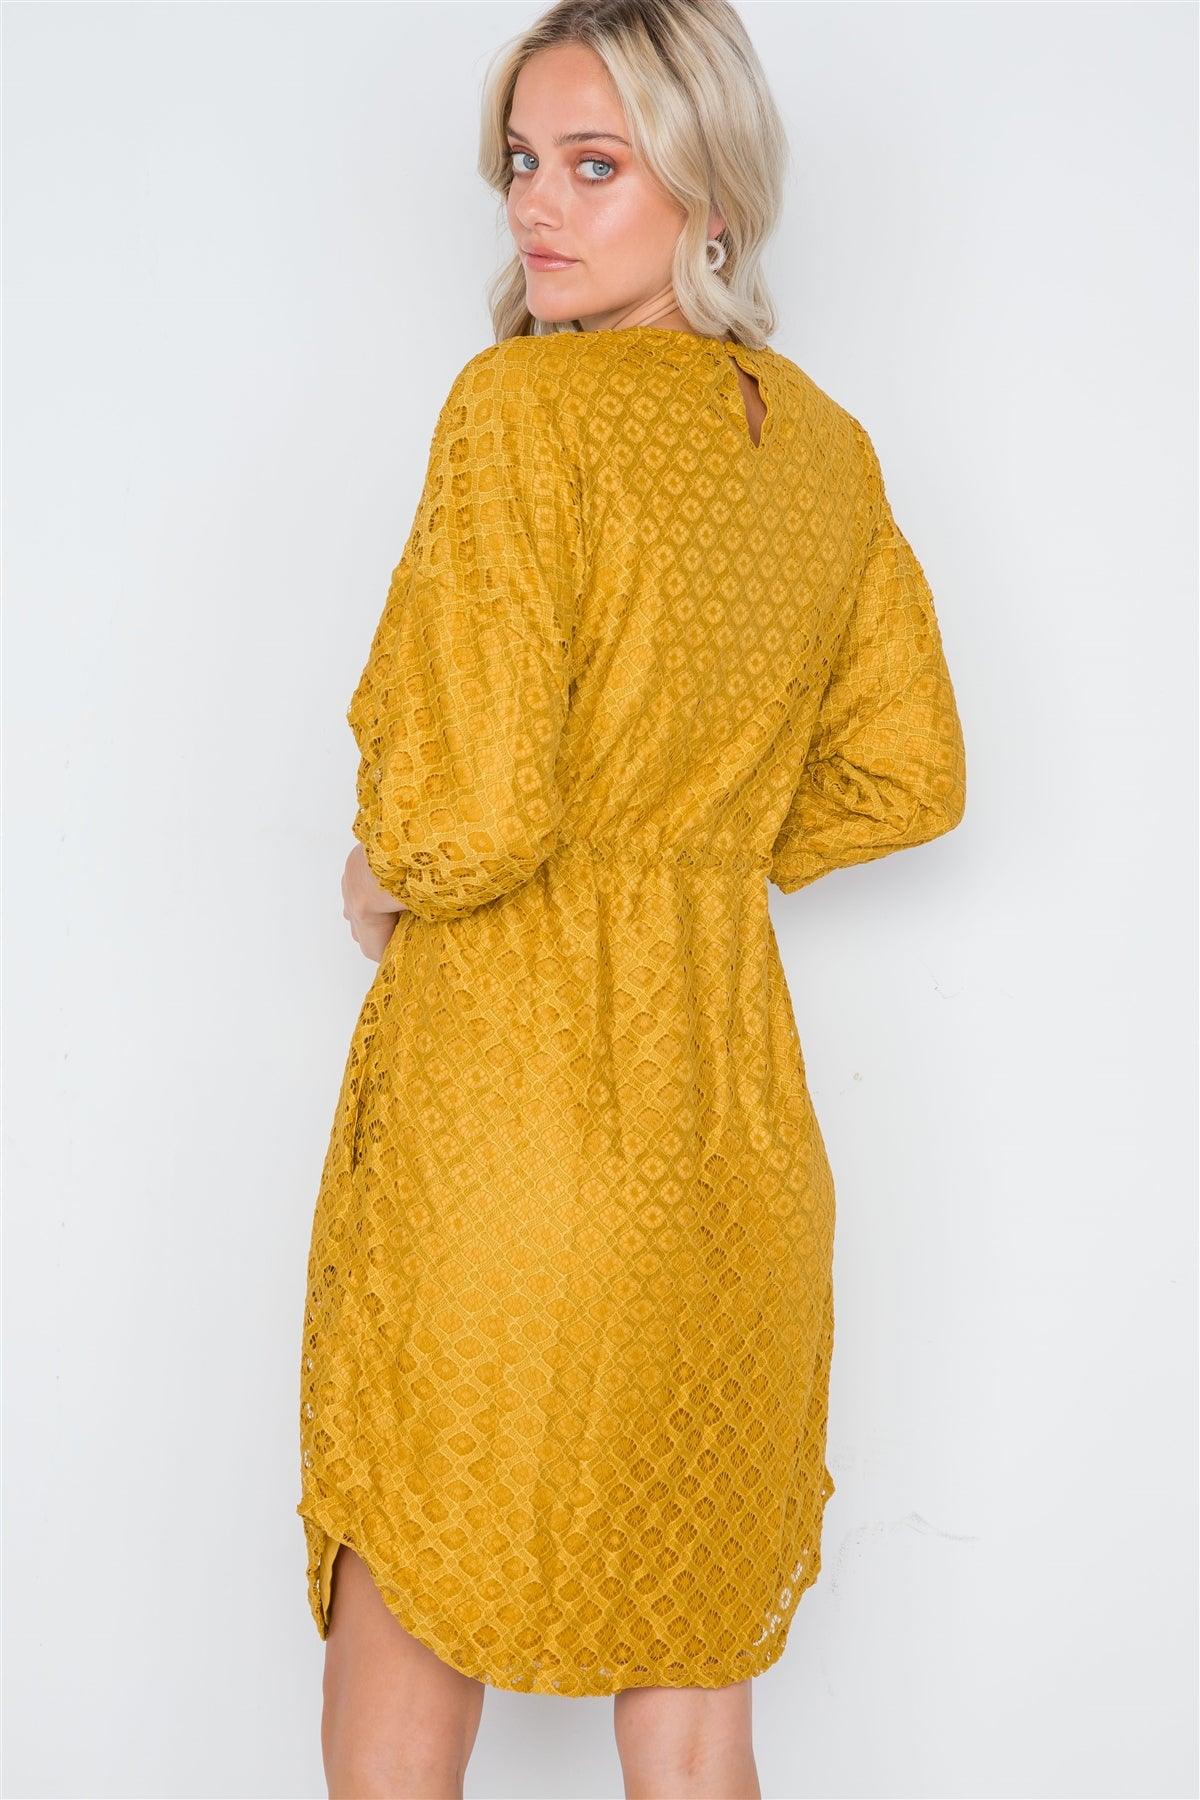 Mustard 3/4 Sleeve Patterned Lace Shift Dress /3-2-1